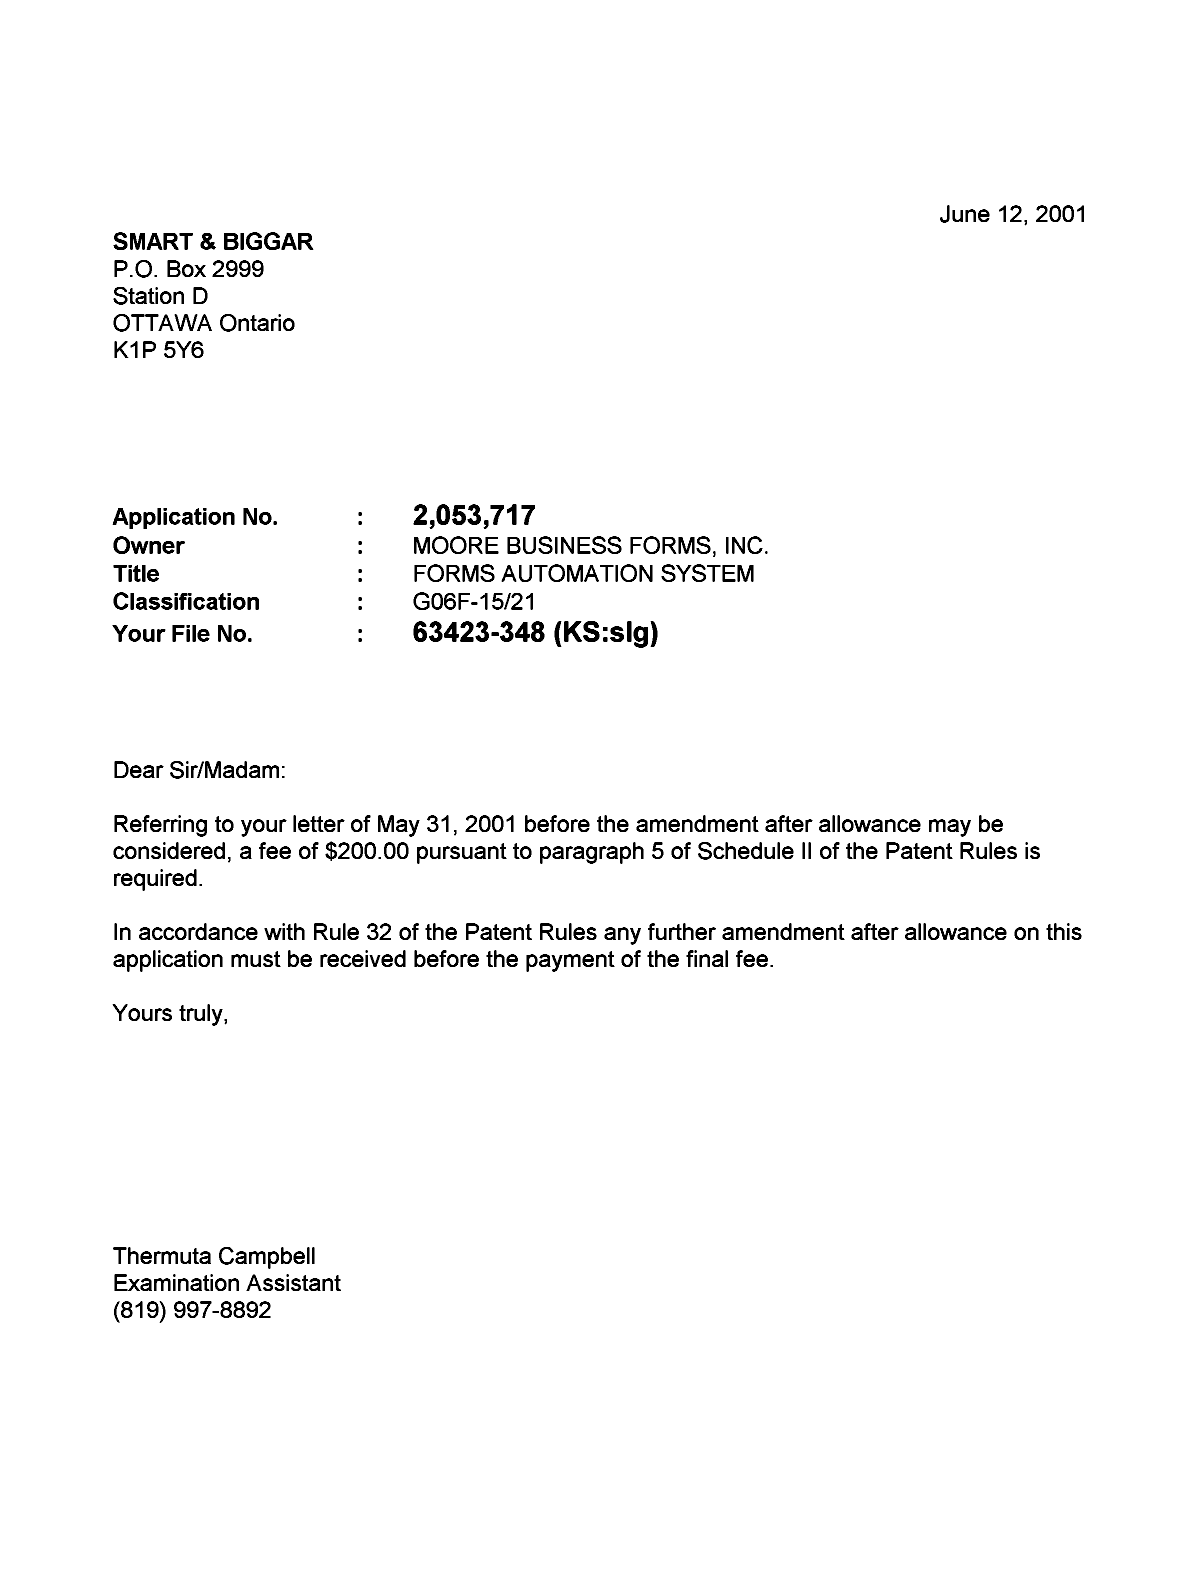 Canadian Patent Document 2053717. Prosecution-Amendment 20010612. Image 1 of 1